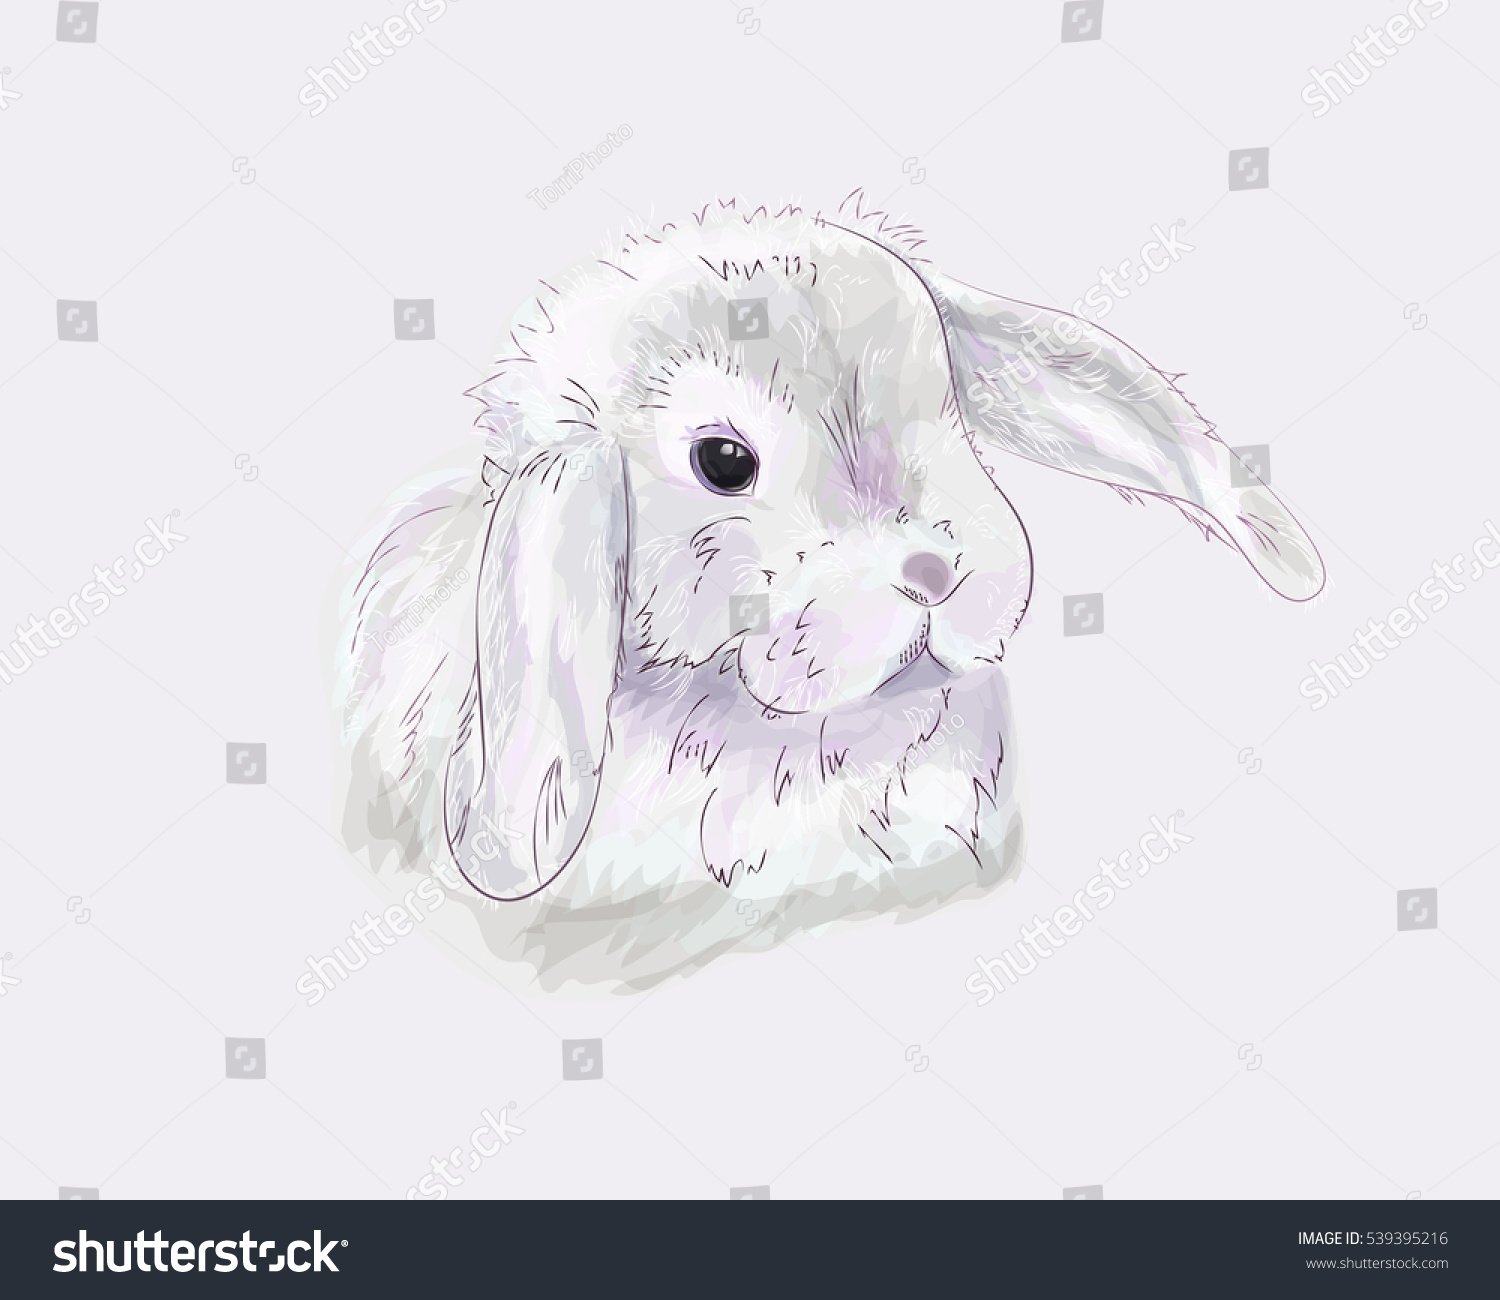 https://www.shutterstock.com/image-illustration/hand-drawn-cute-easter-bunny-pastel-539395216